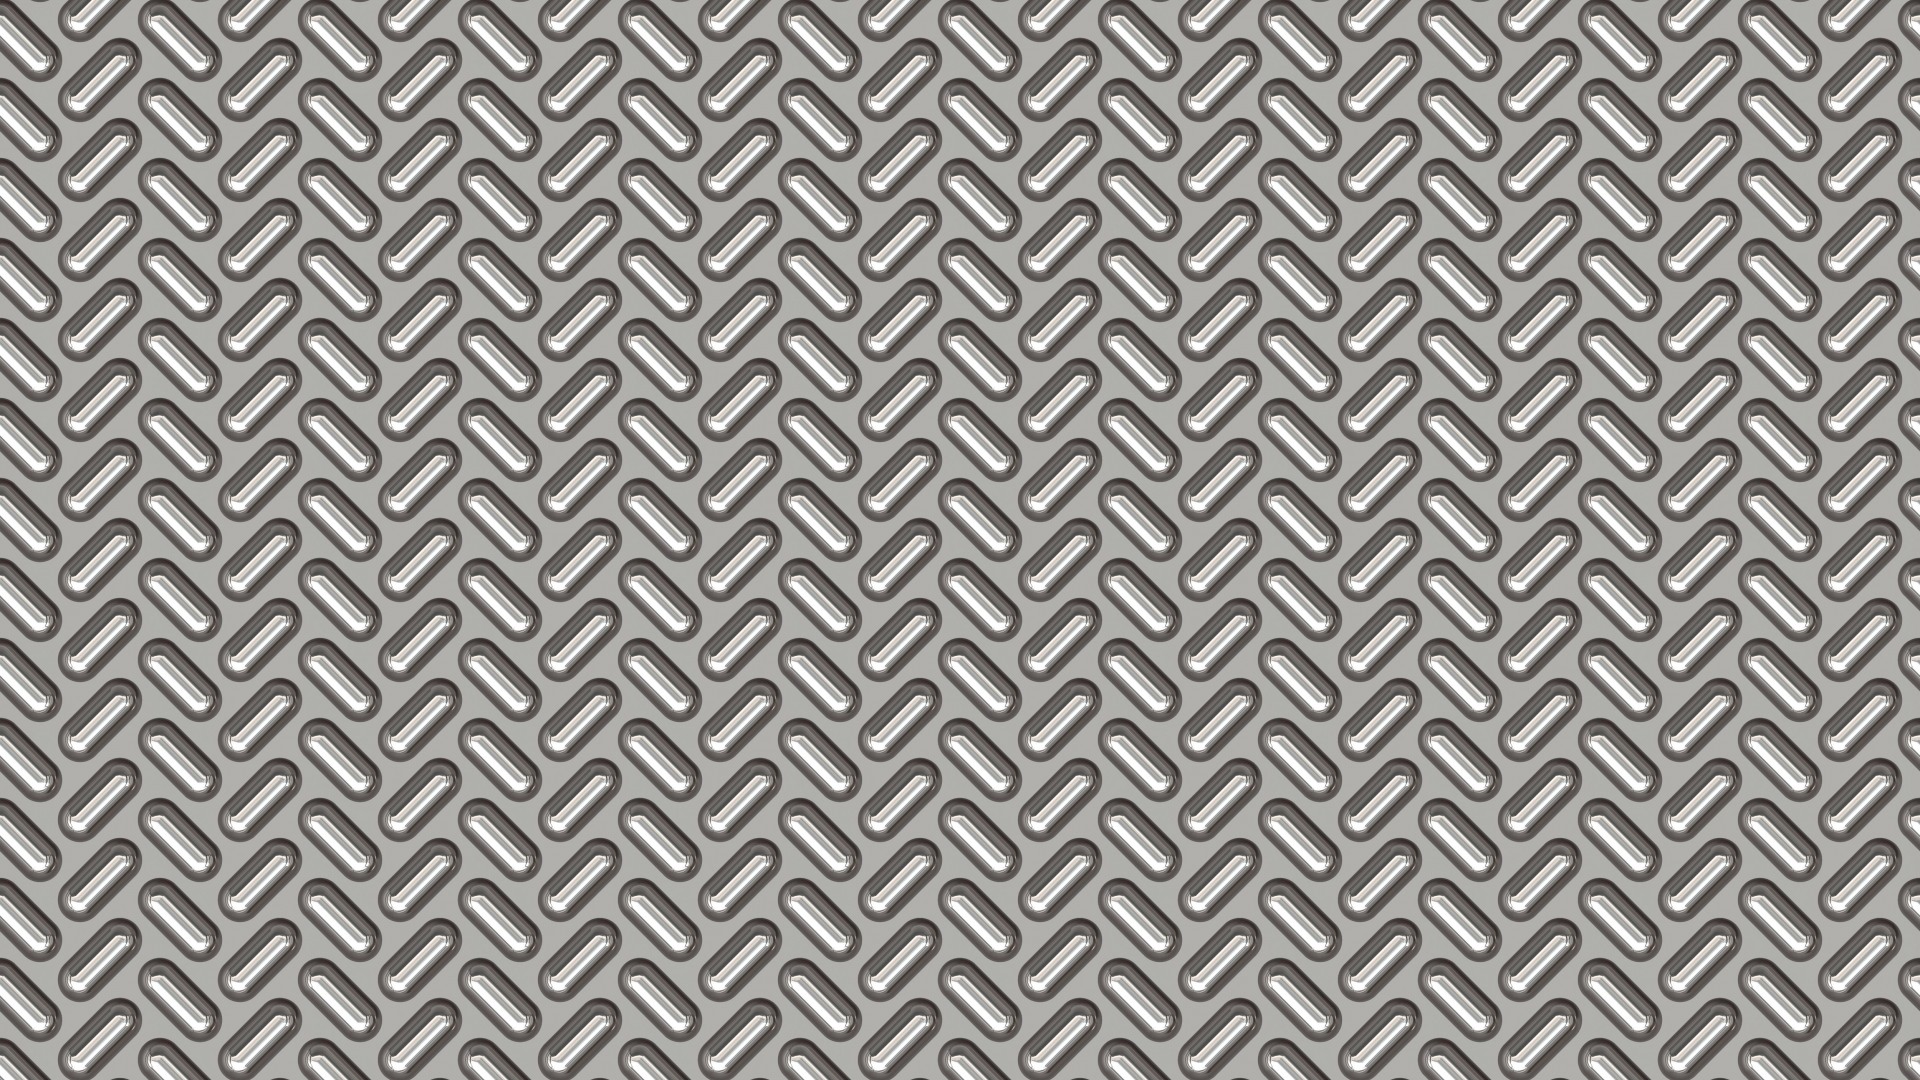 1920x1080 metal diamond plate wallpaper - HD 1920Ã1080